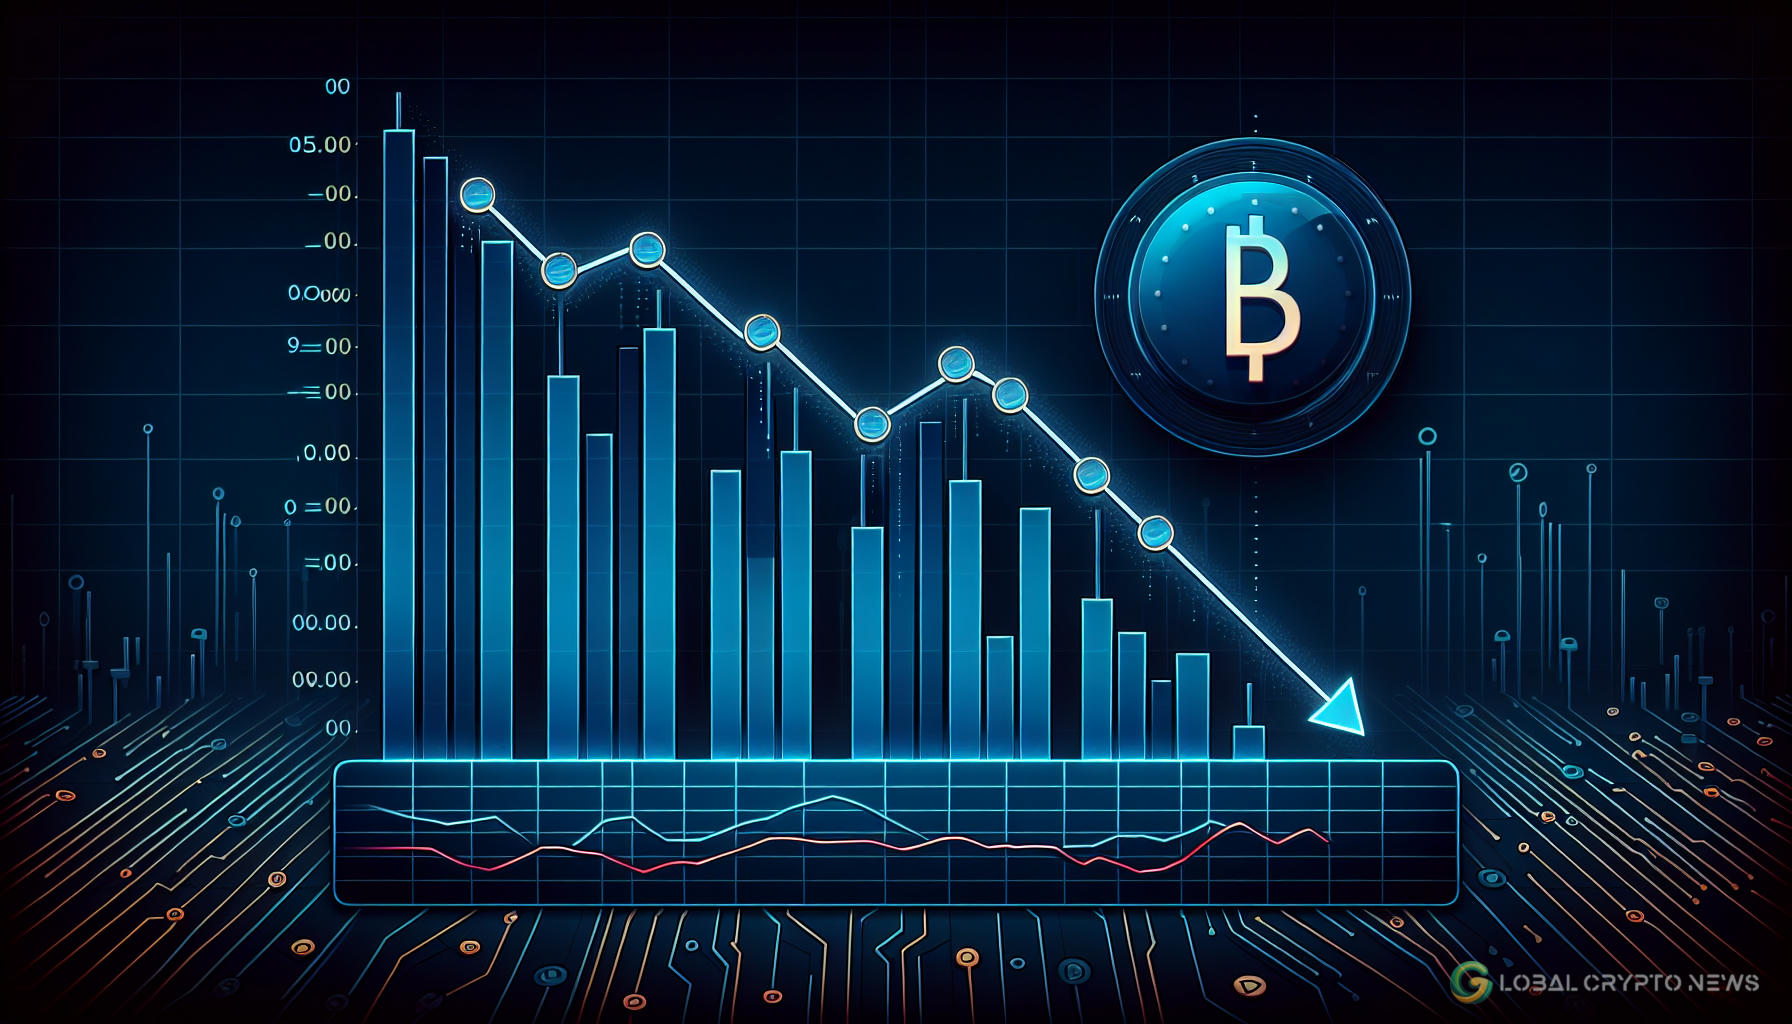 Bitcoin Funding Rate Turns Negative Amid Decreased Demand